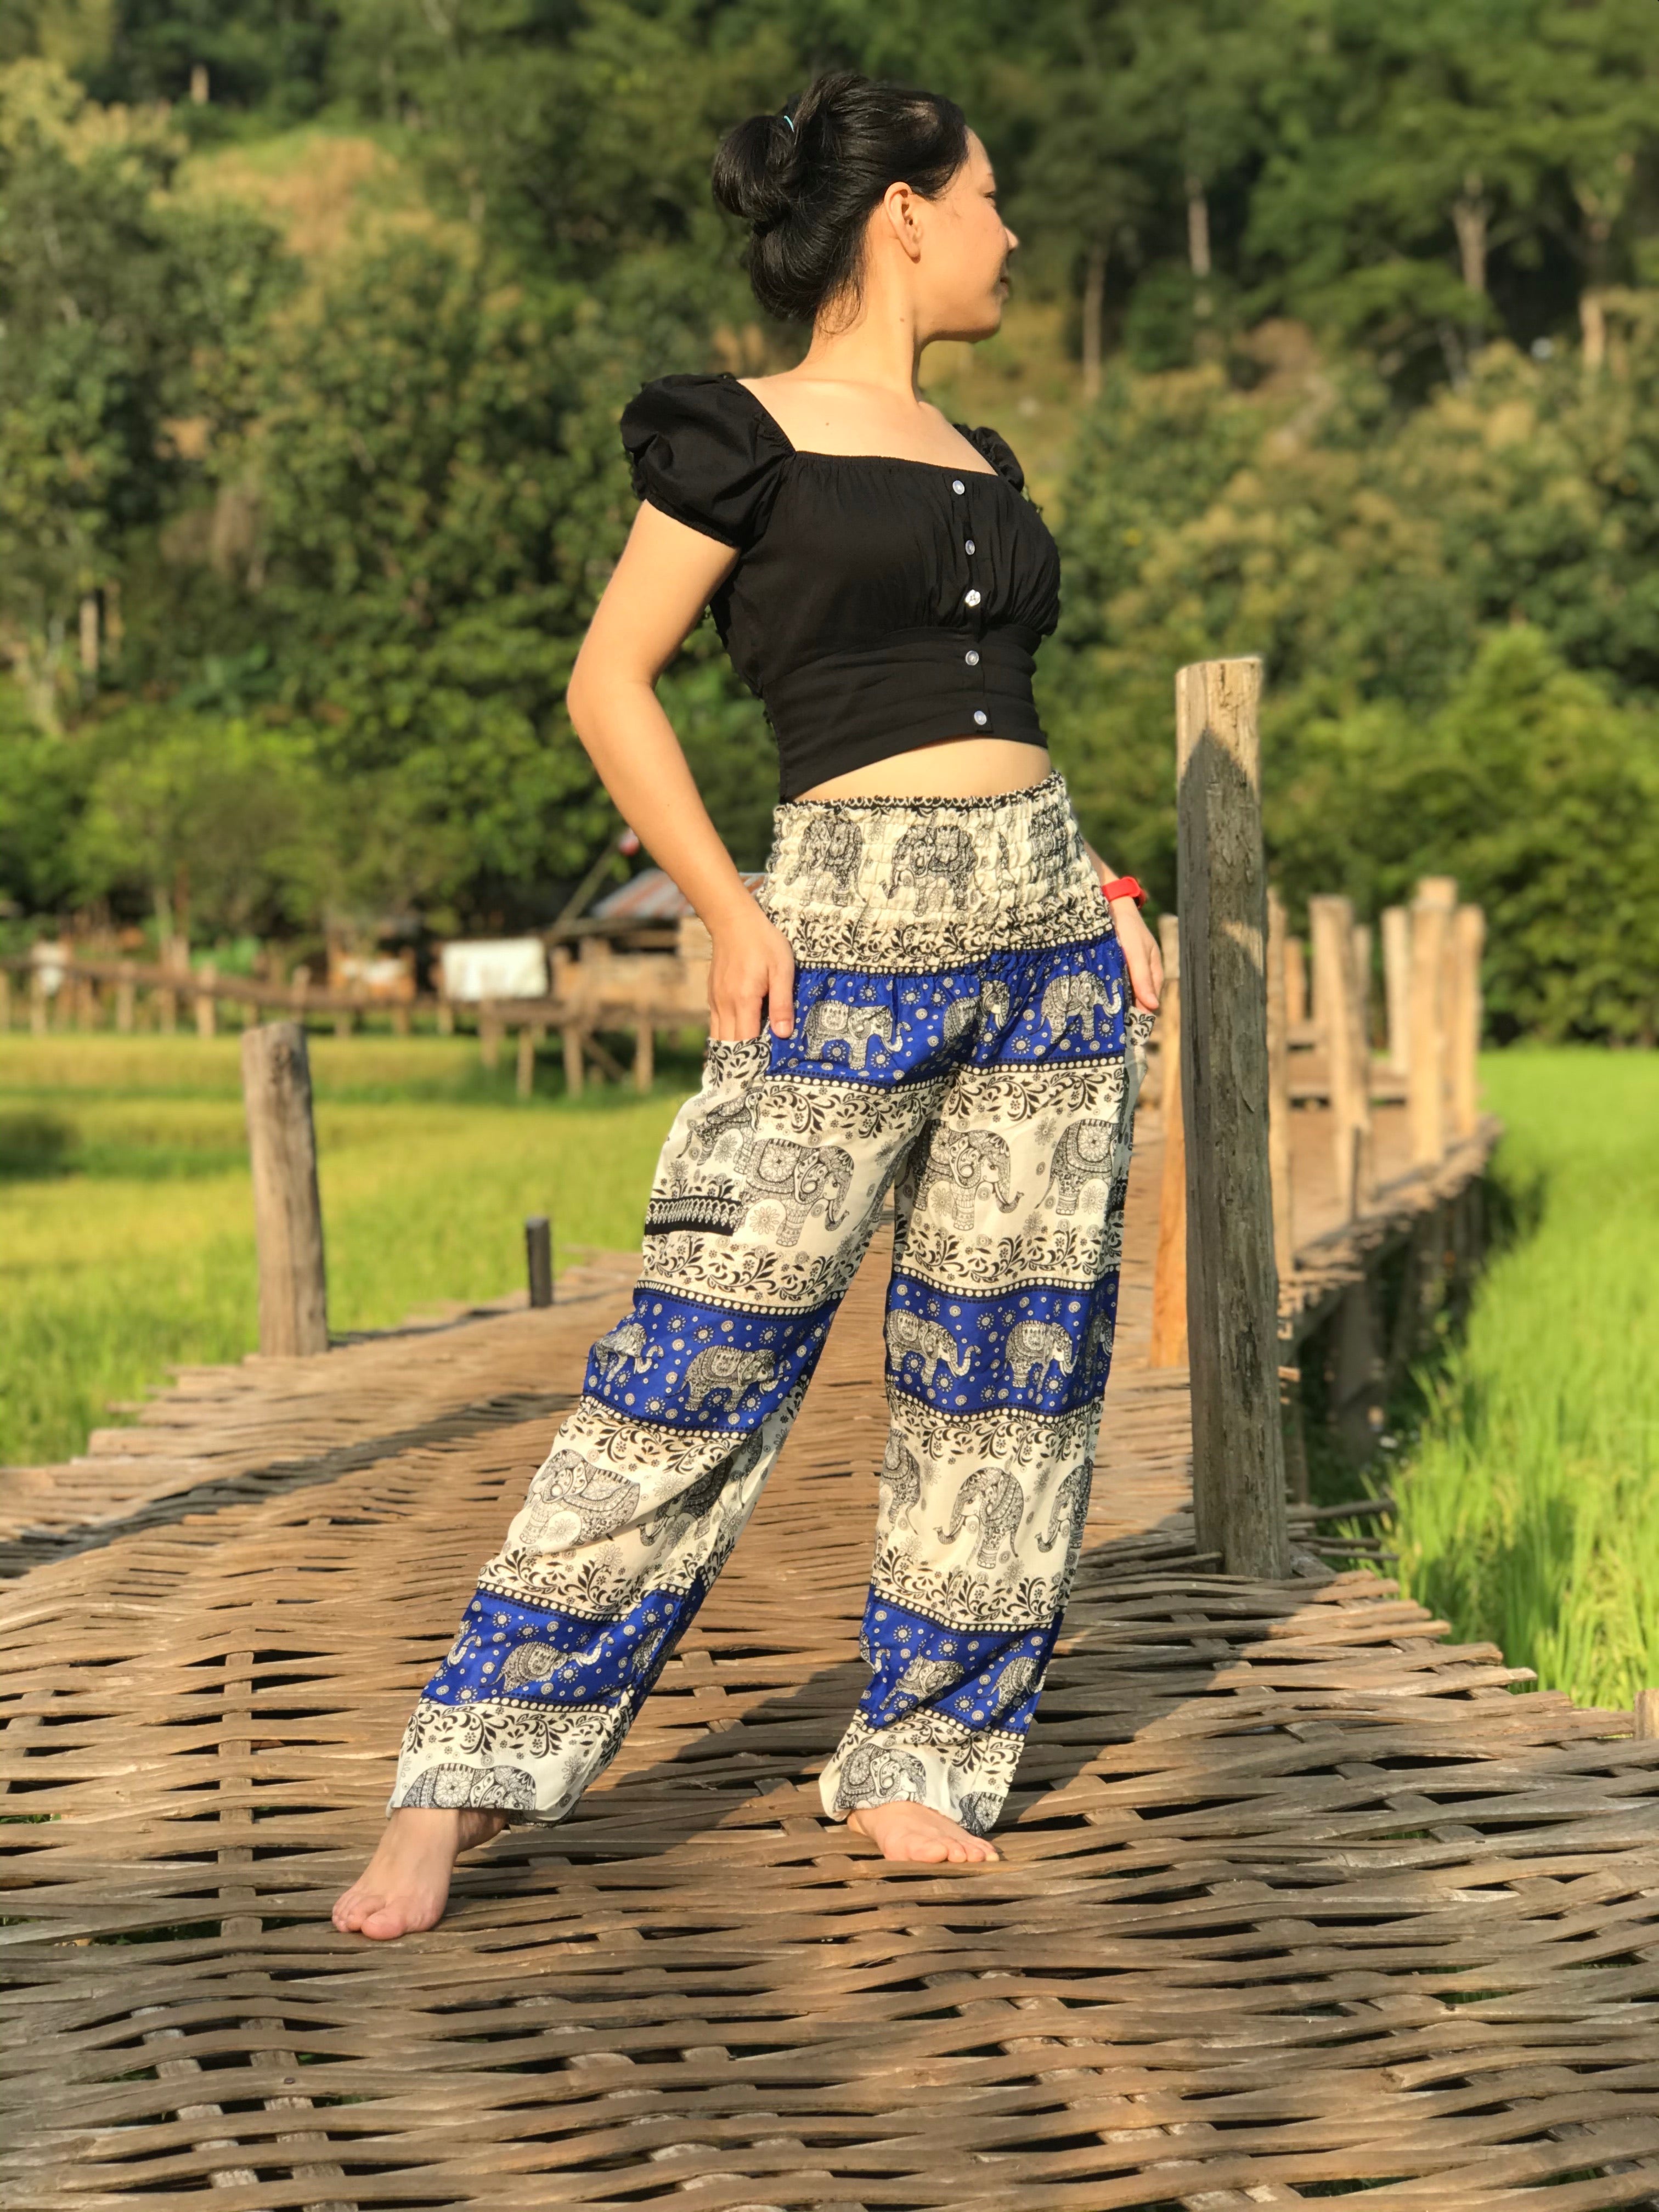 Pack of 10 Thai Elephant Pants Hippy Harem Yoga Loose Fitting FREE